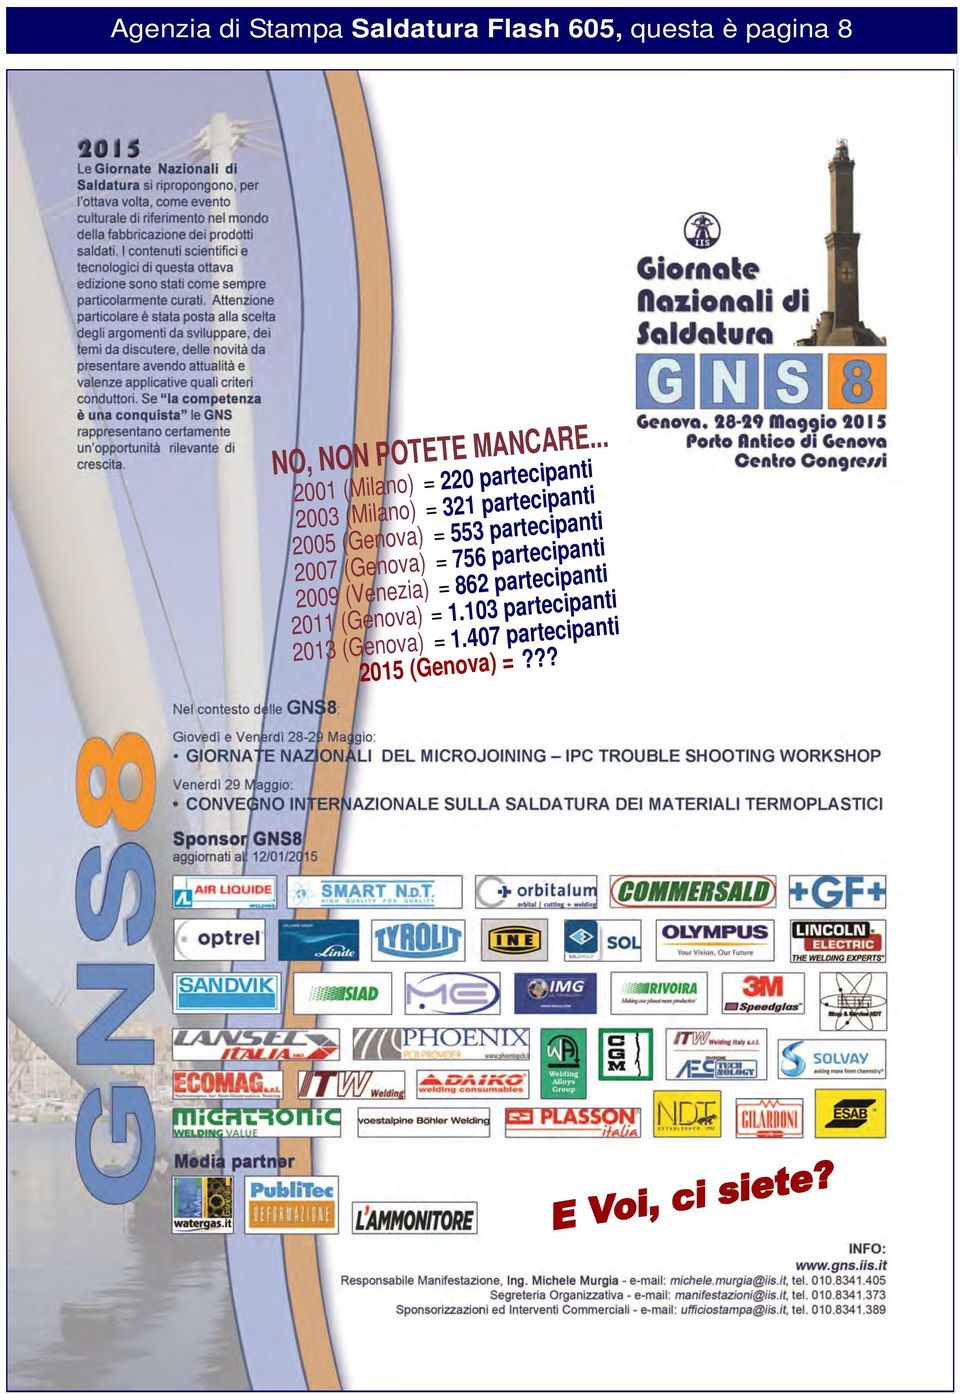 553 partecipanti 2007 (Genova) = 756 partecipanti 2009 (Venezia) = 862 partecipanti